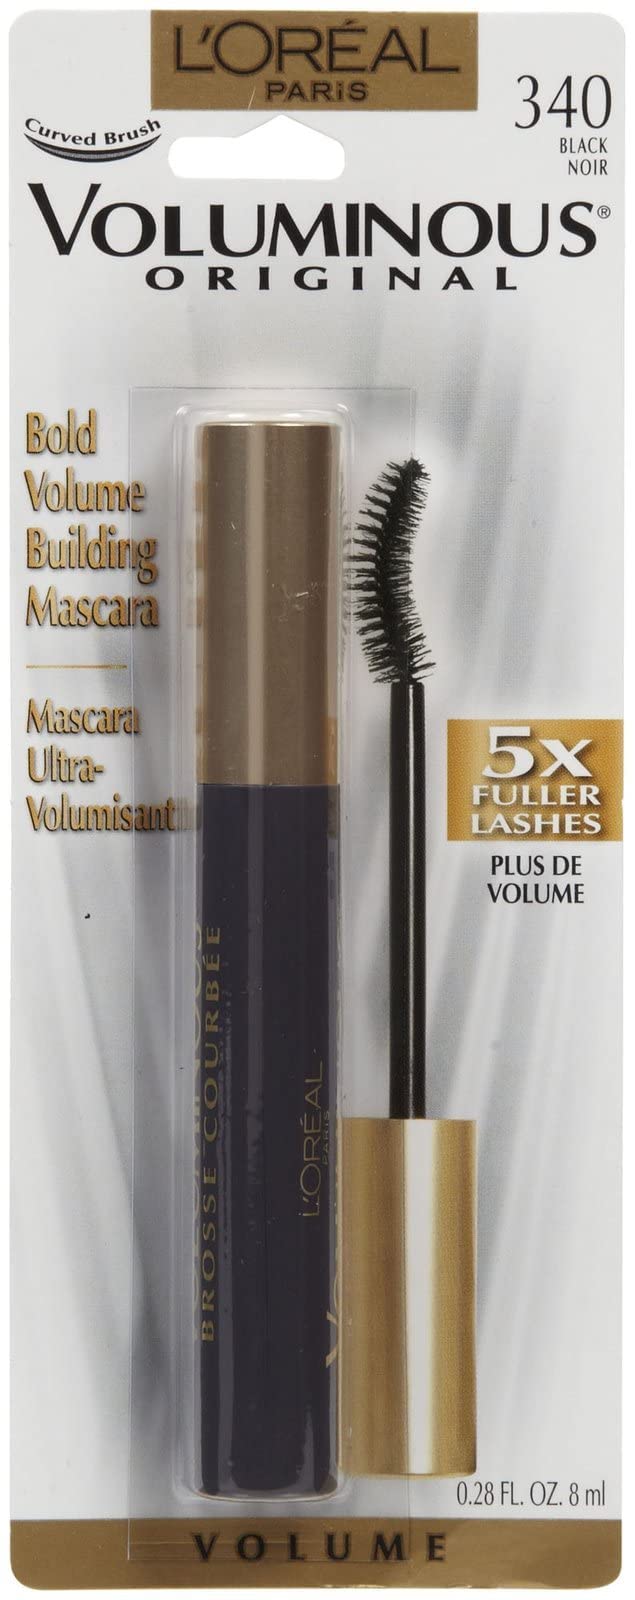 L’Oreal Paris Makeup Voluminous Mascara Original, Curved Brush Lifts & Builds Lashes Up To 5X Volume, Clump Free, Smudge Free, Black, 0.28 Fl Oz